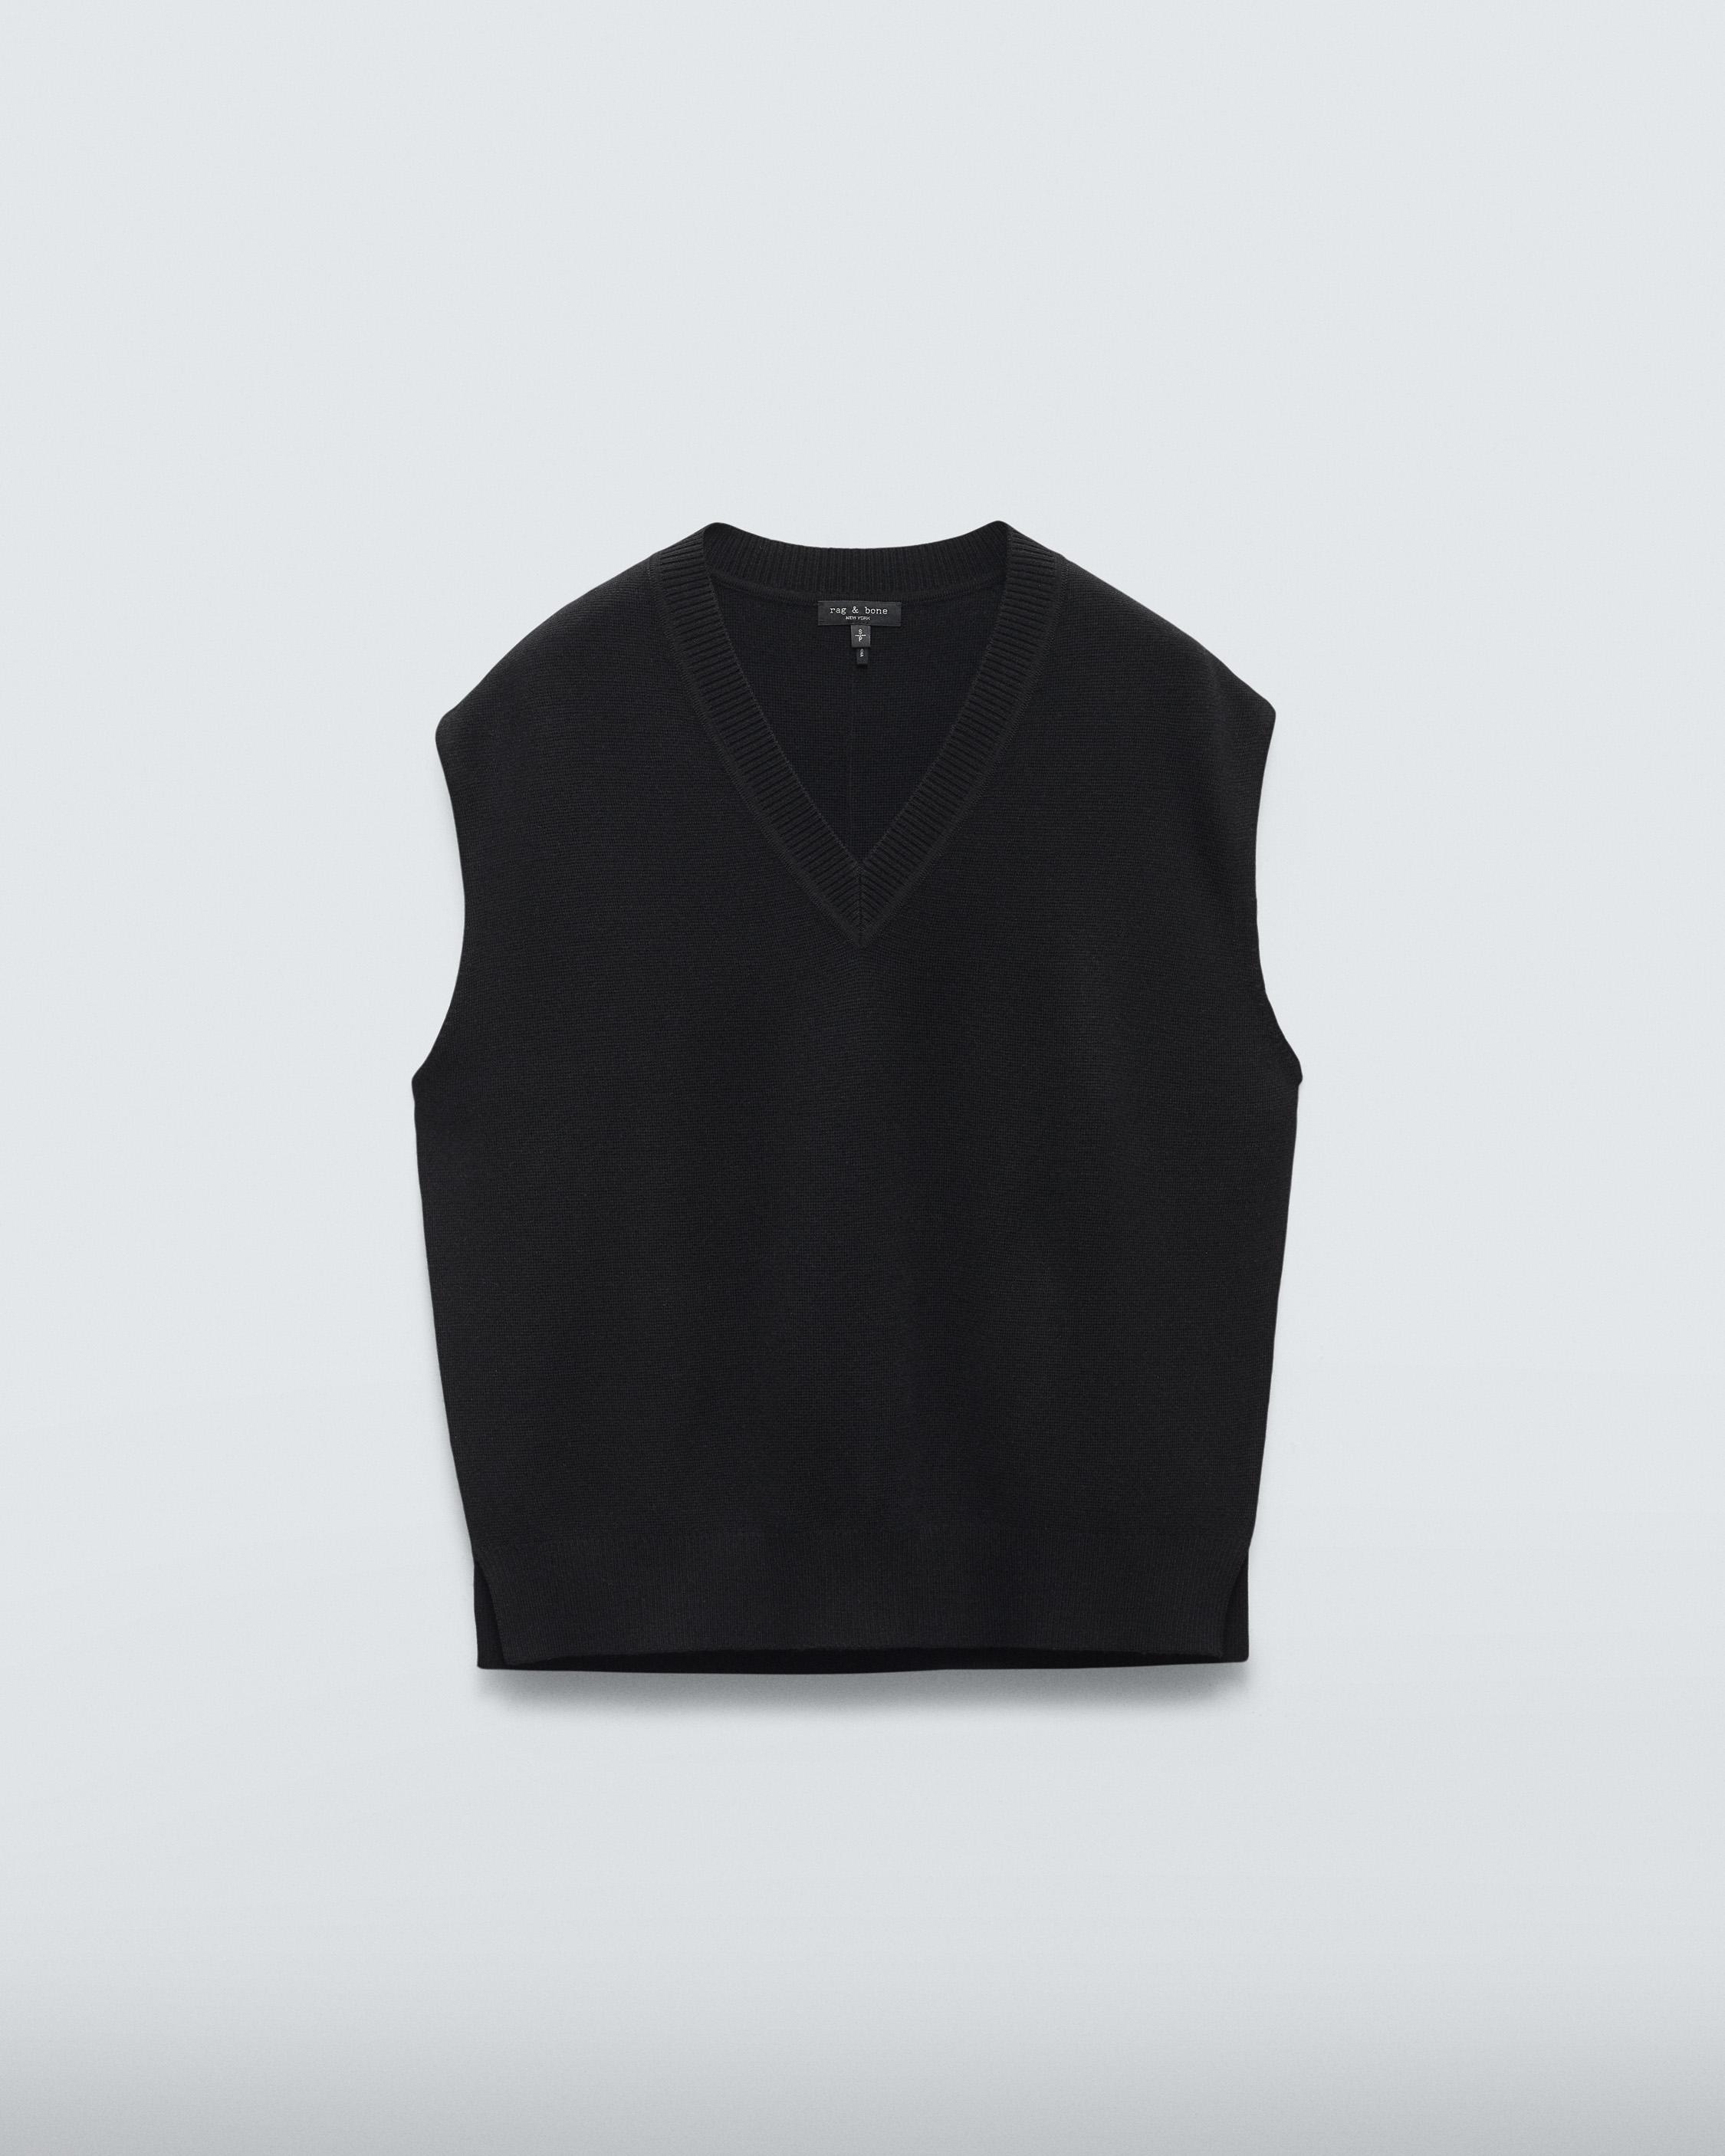  Bollrllr Women's Sweater Vest 100% Merino Wool Vest V Neck  Button Sleeveless Knit Cardigan Vest Black S : Clothing, Shoes & Jewelry